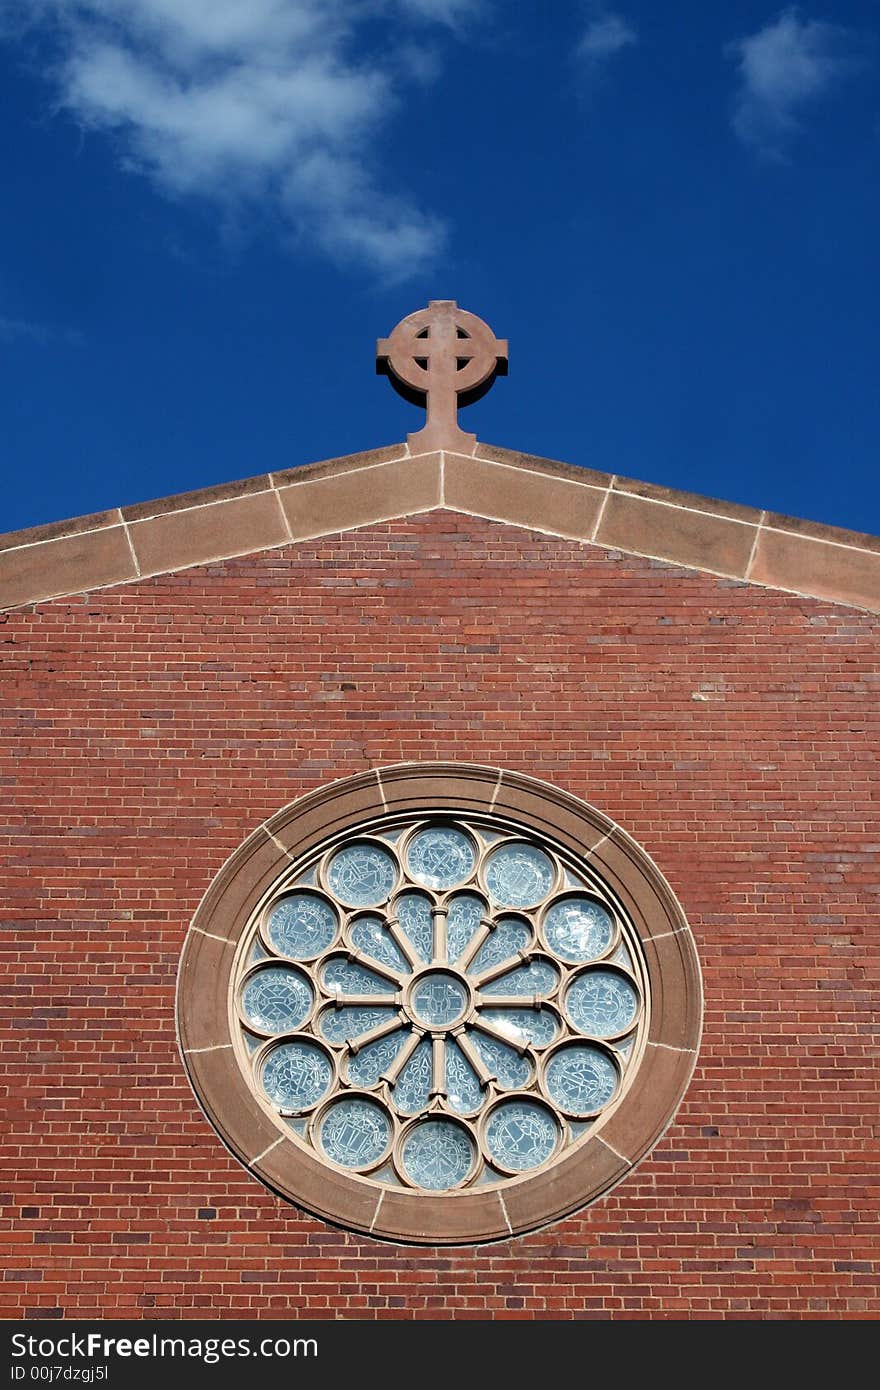 A photograph taken outside a church in Oklahoma City. A photograph taken outside a church in Oklahoma City.